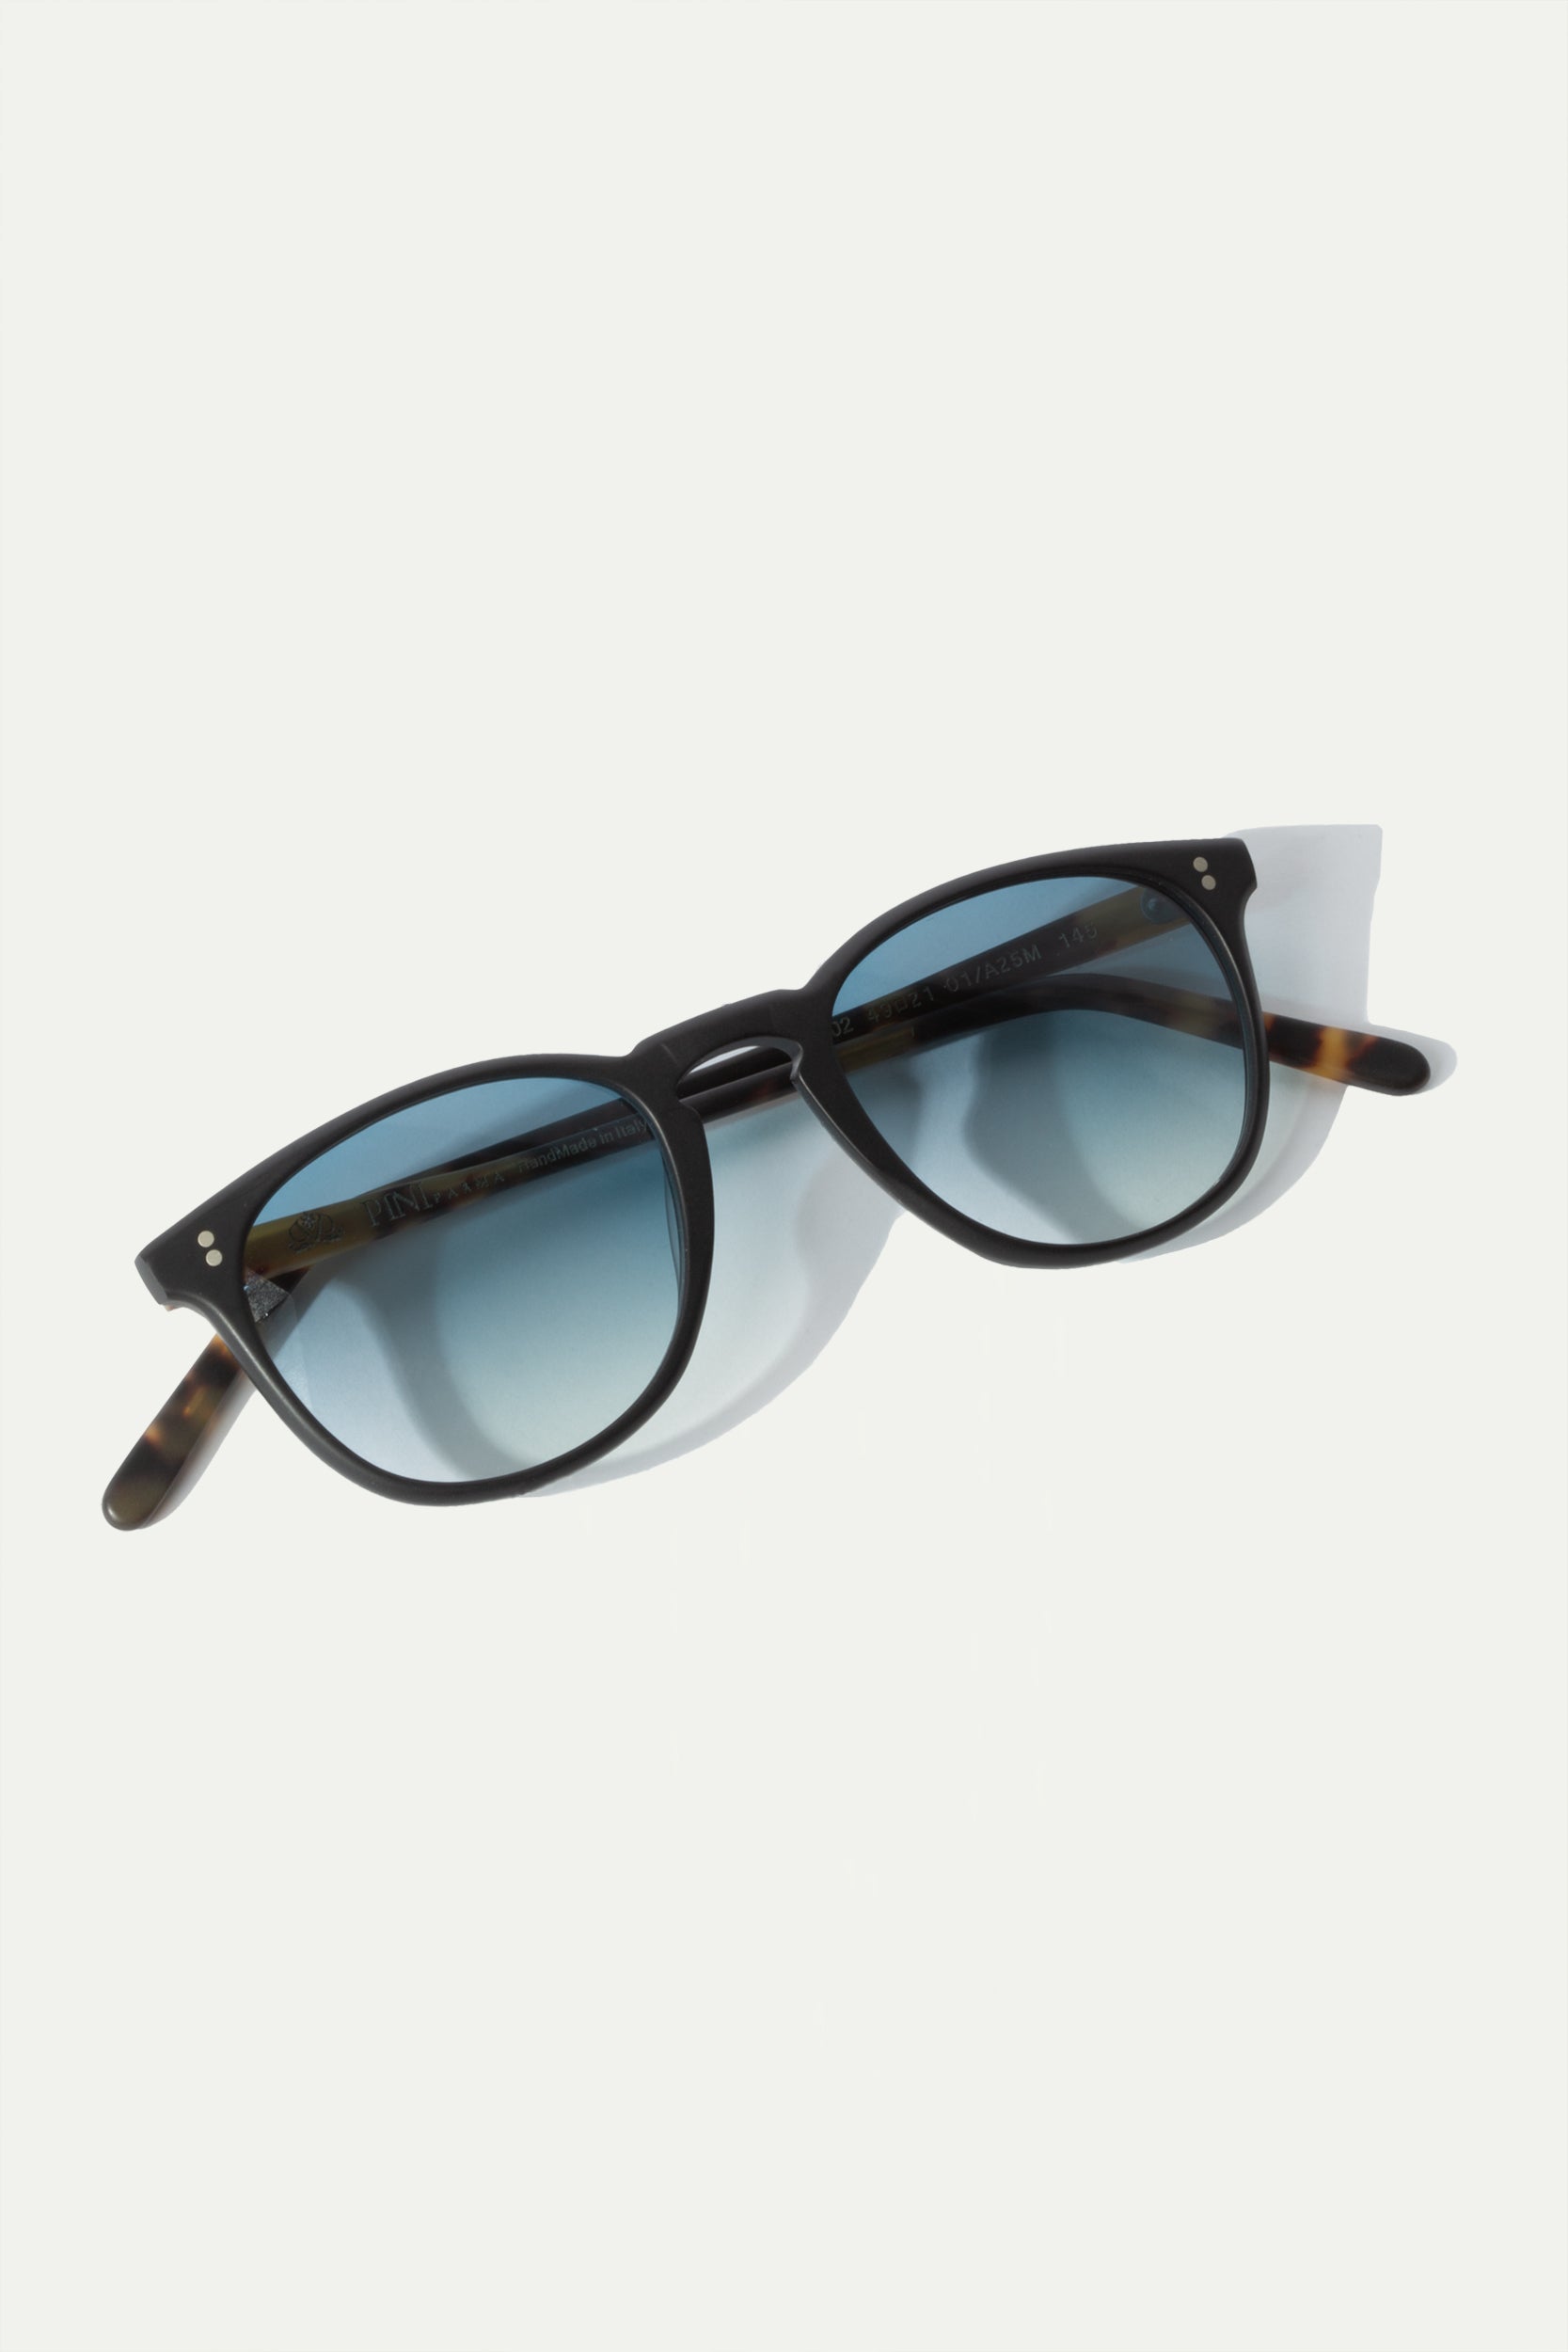 Black sunglasses Capri - Made in Italy